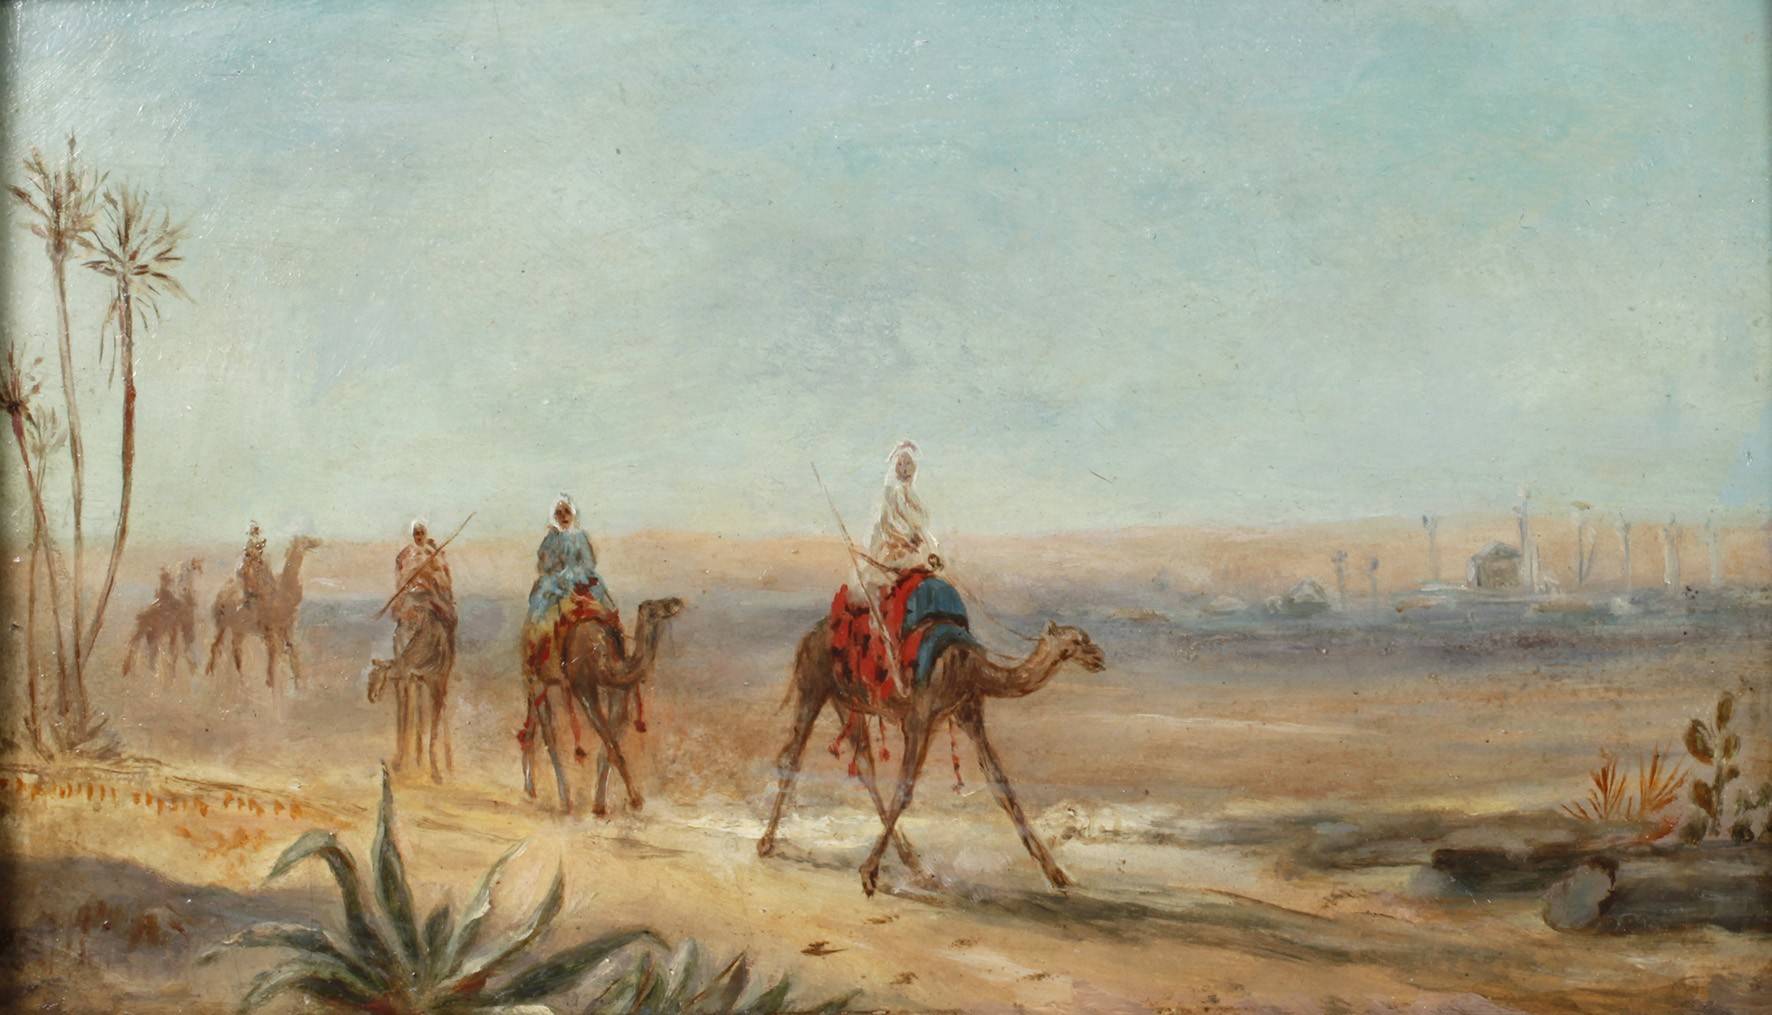 Kamelkarawane in der Wüste